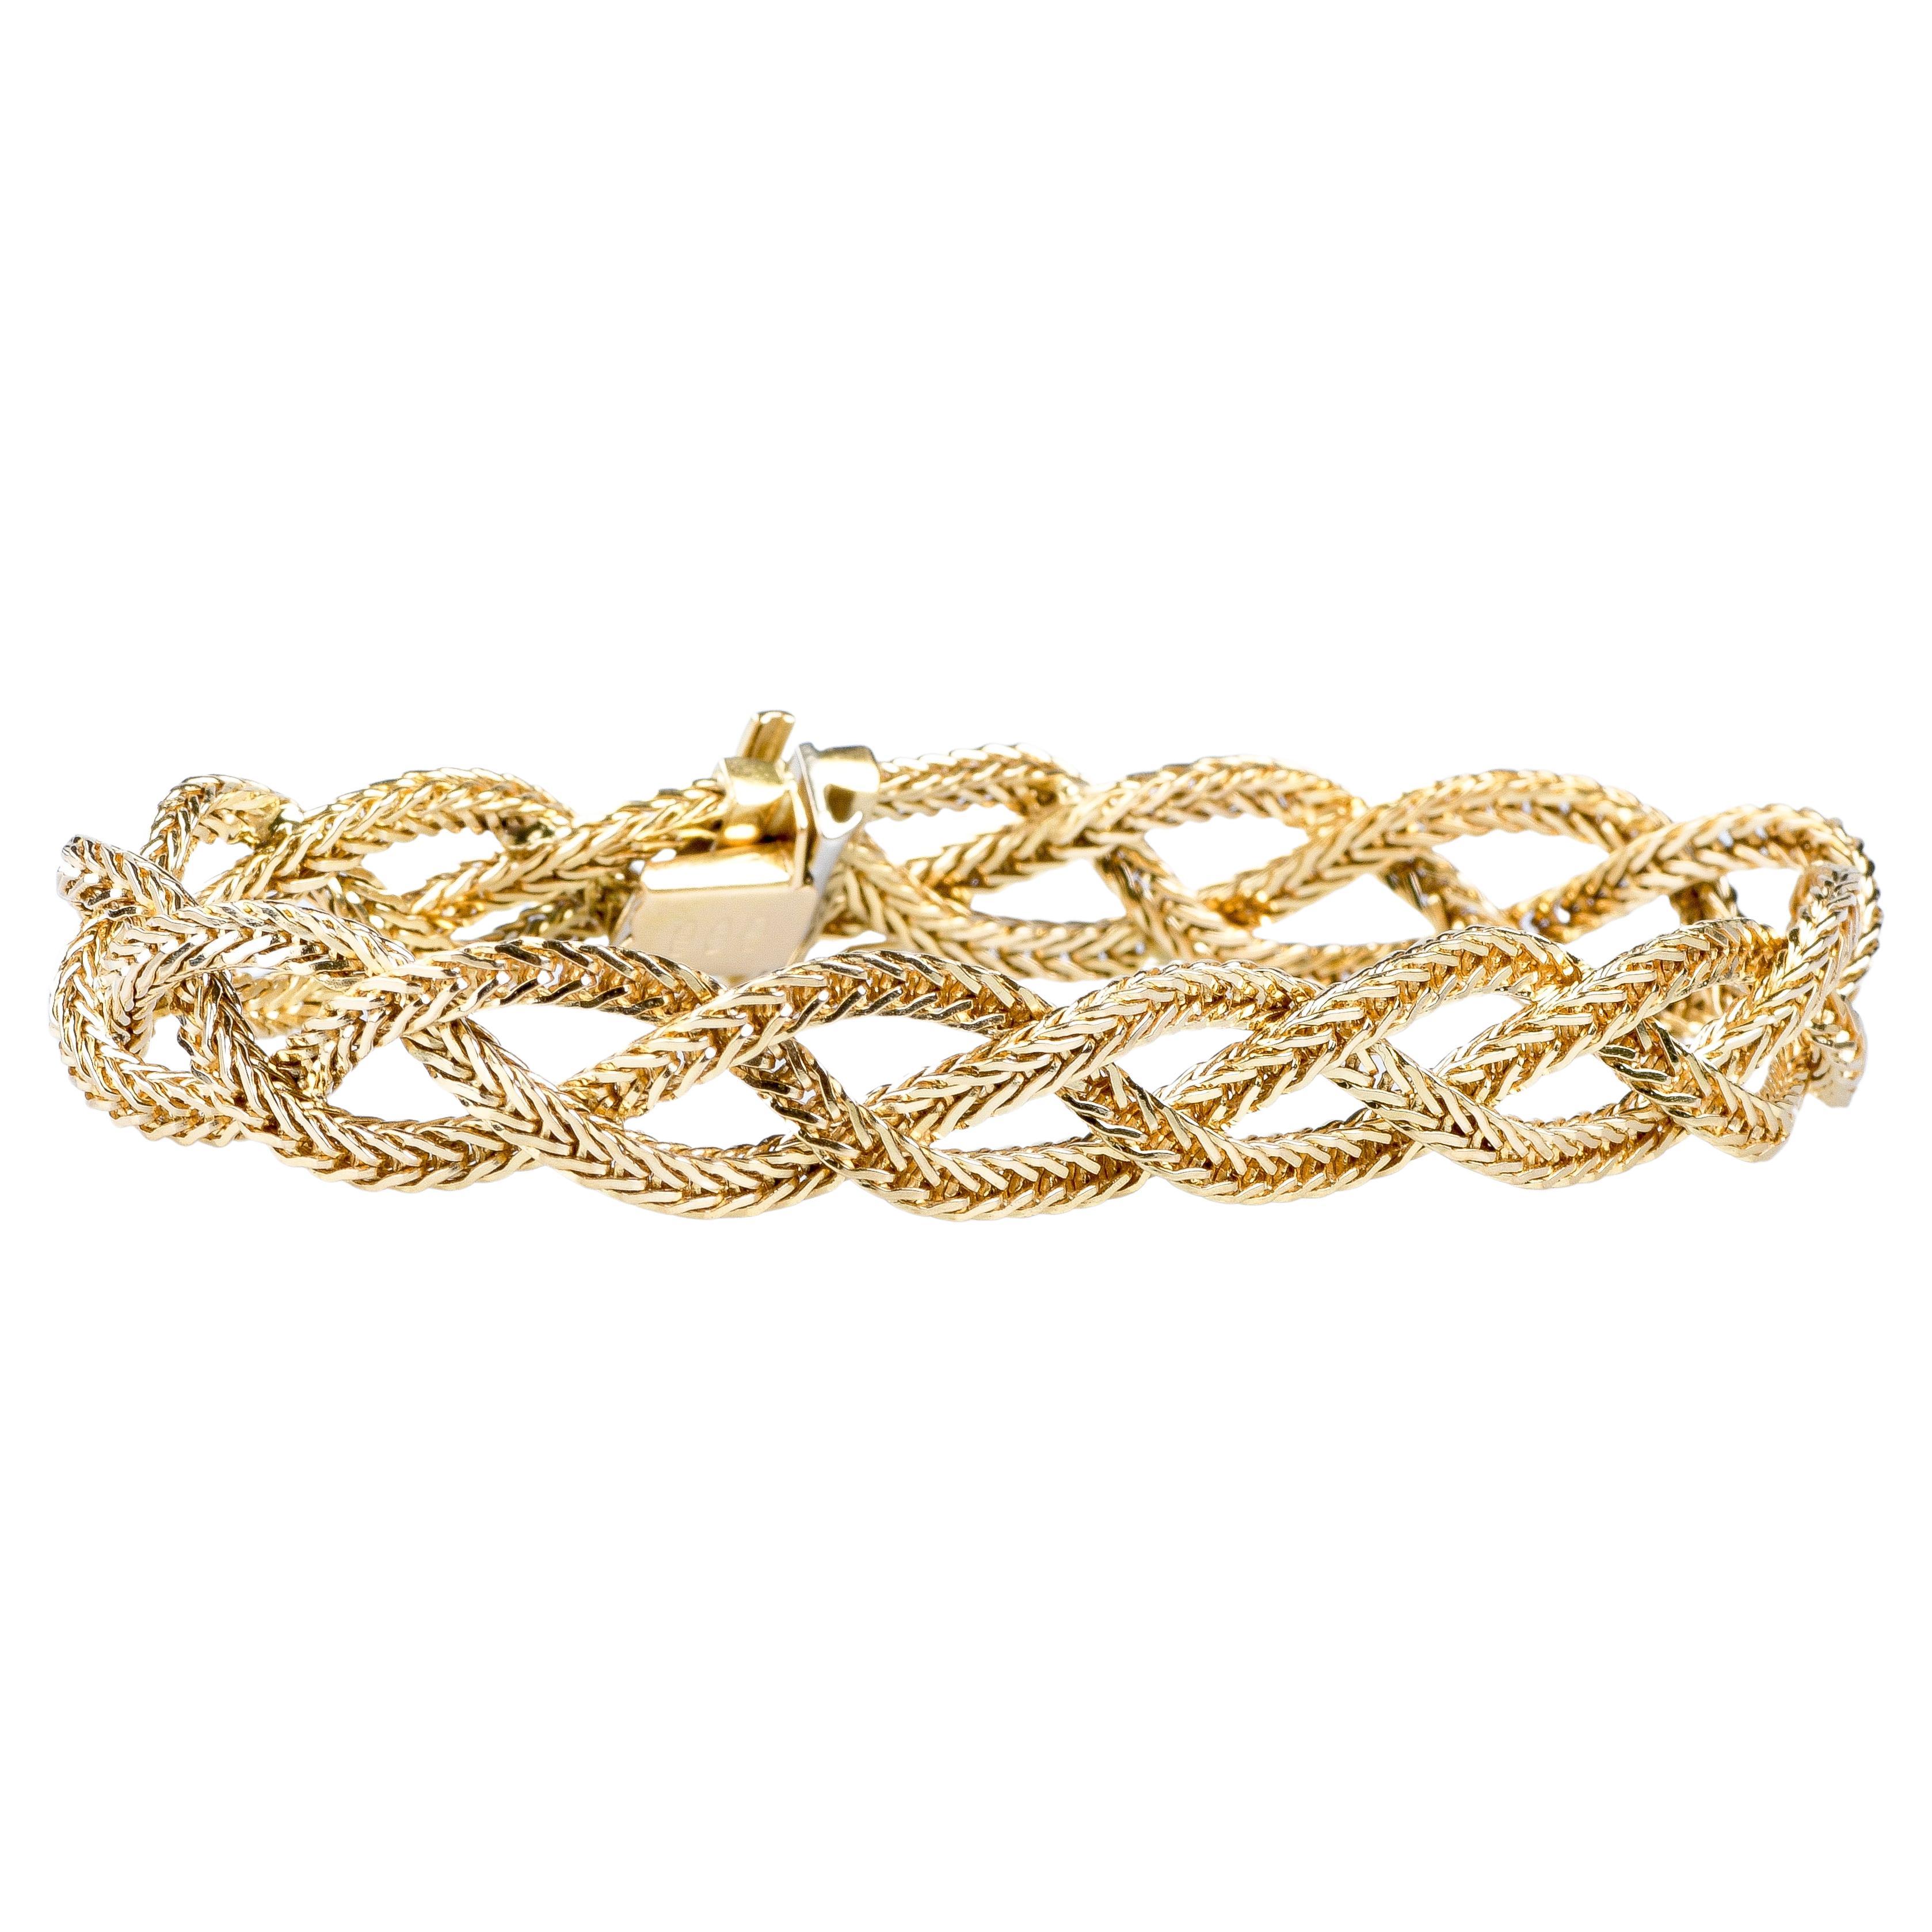 18 carat yellow gold braid bracelet